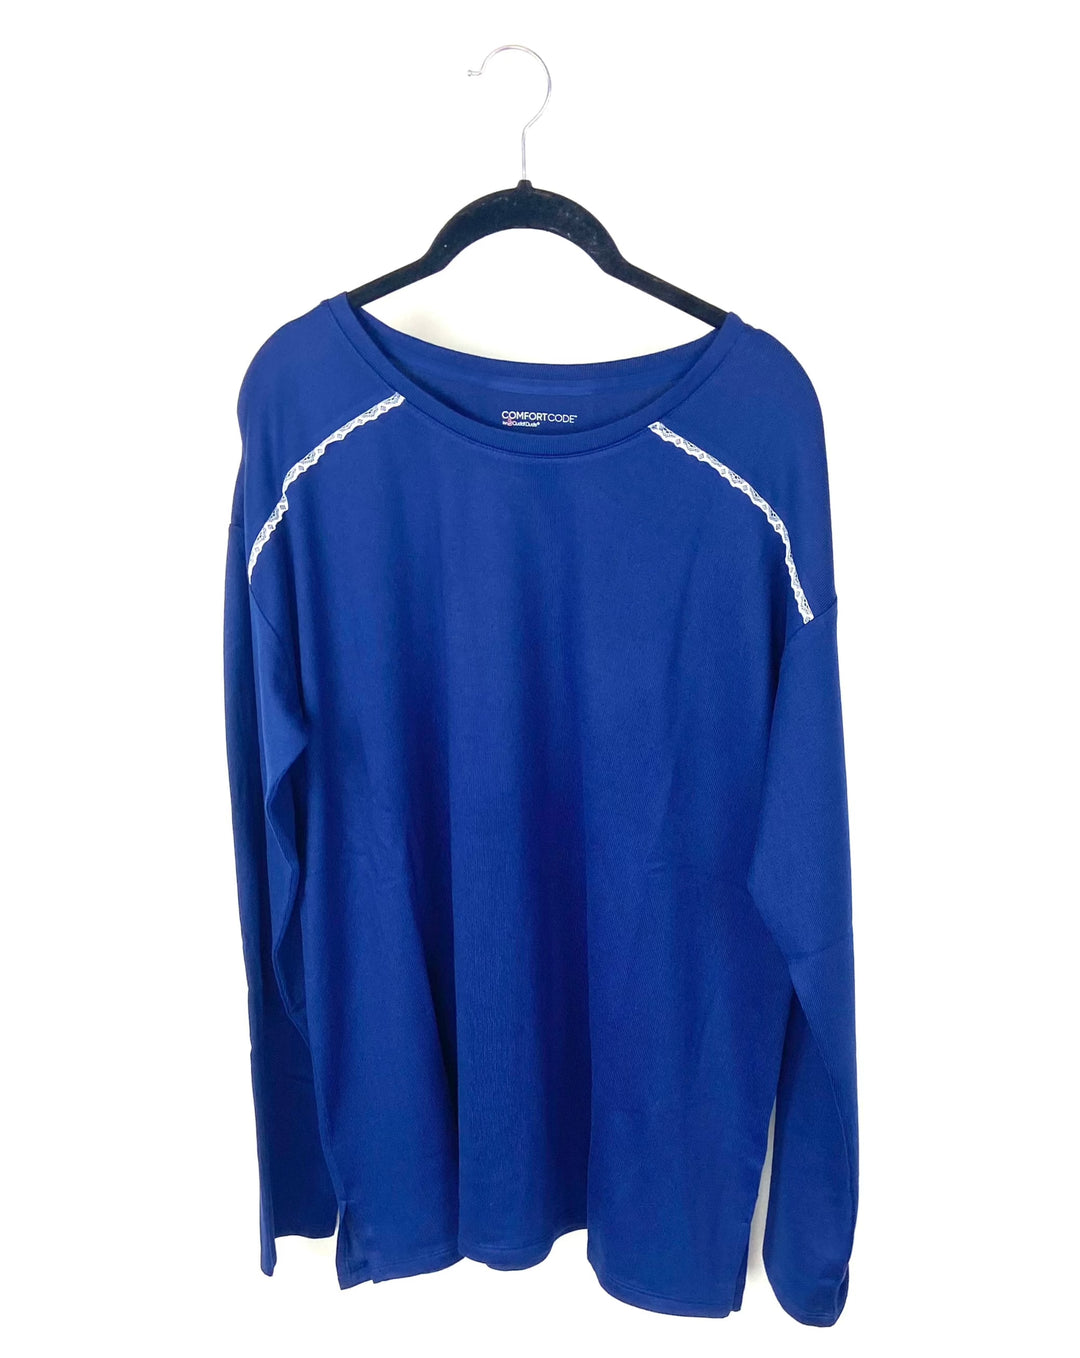 Navy Blue Long Sleeve Pajama Top - Small & Medium